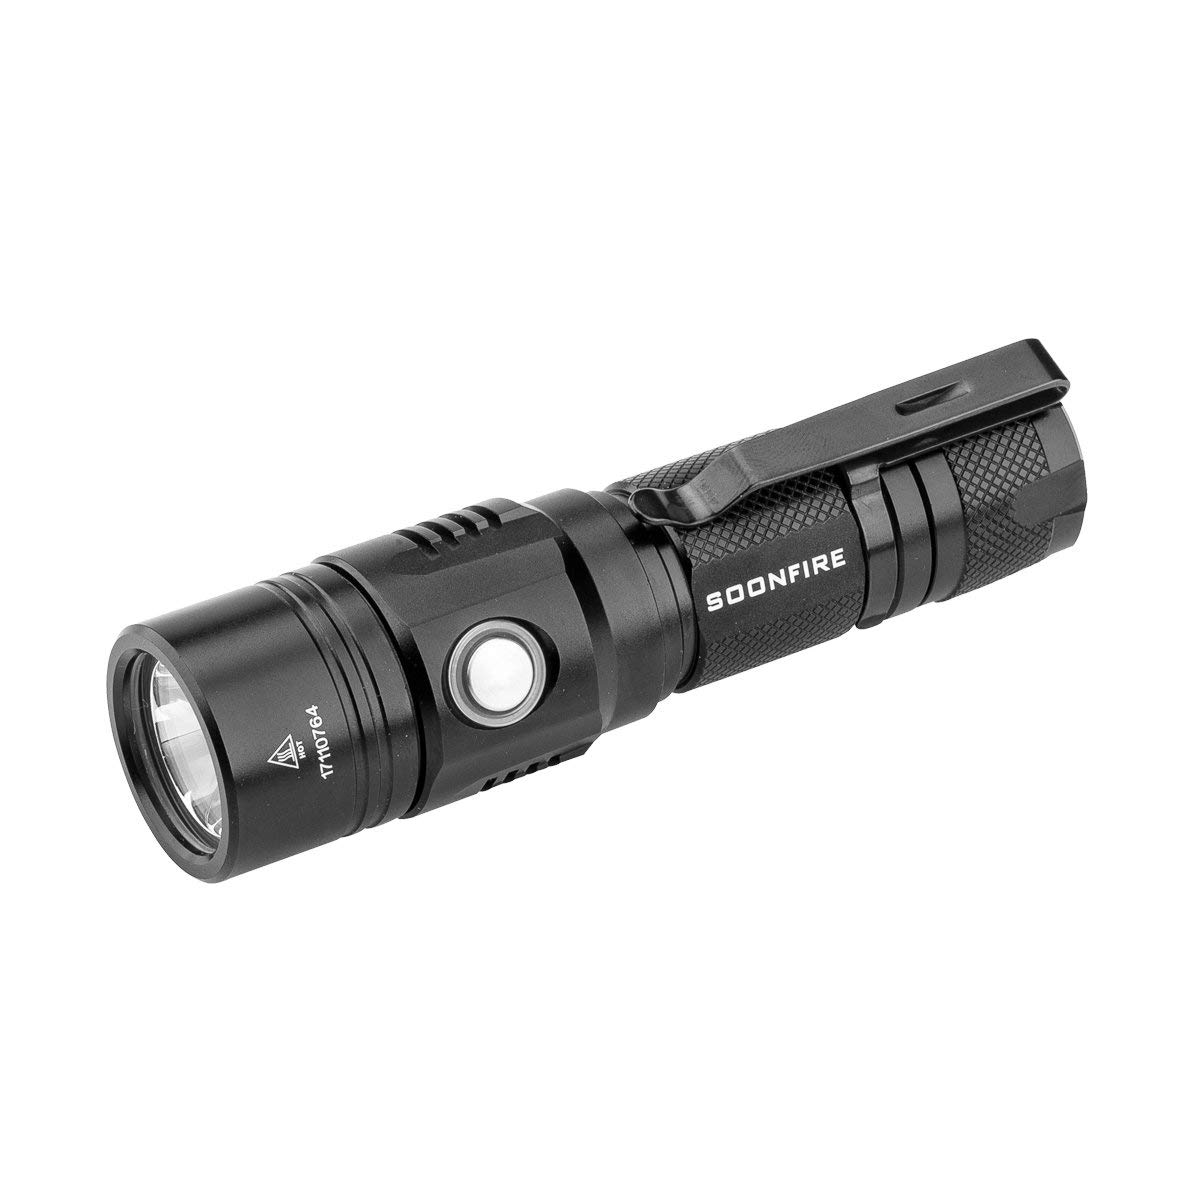 Soonfire E07 1000 Lumens EDC LED Flashlight,USB Rechargeable Waterproof Compact Law Enforcement flashlights